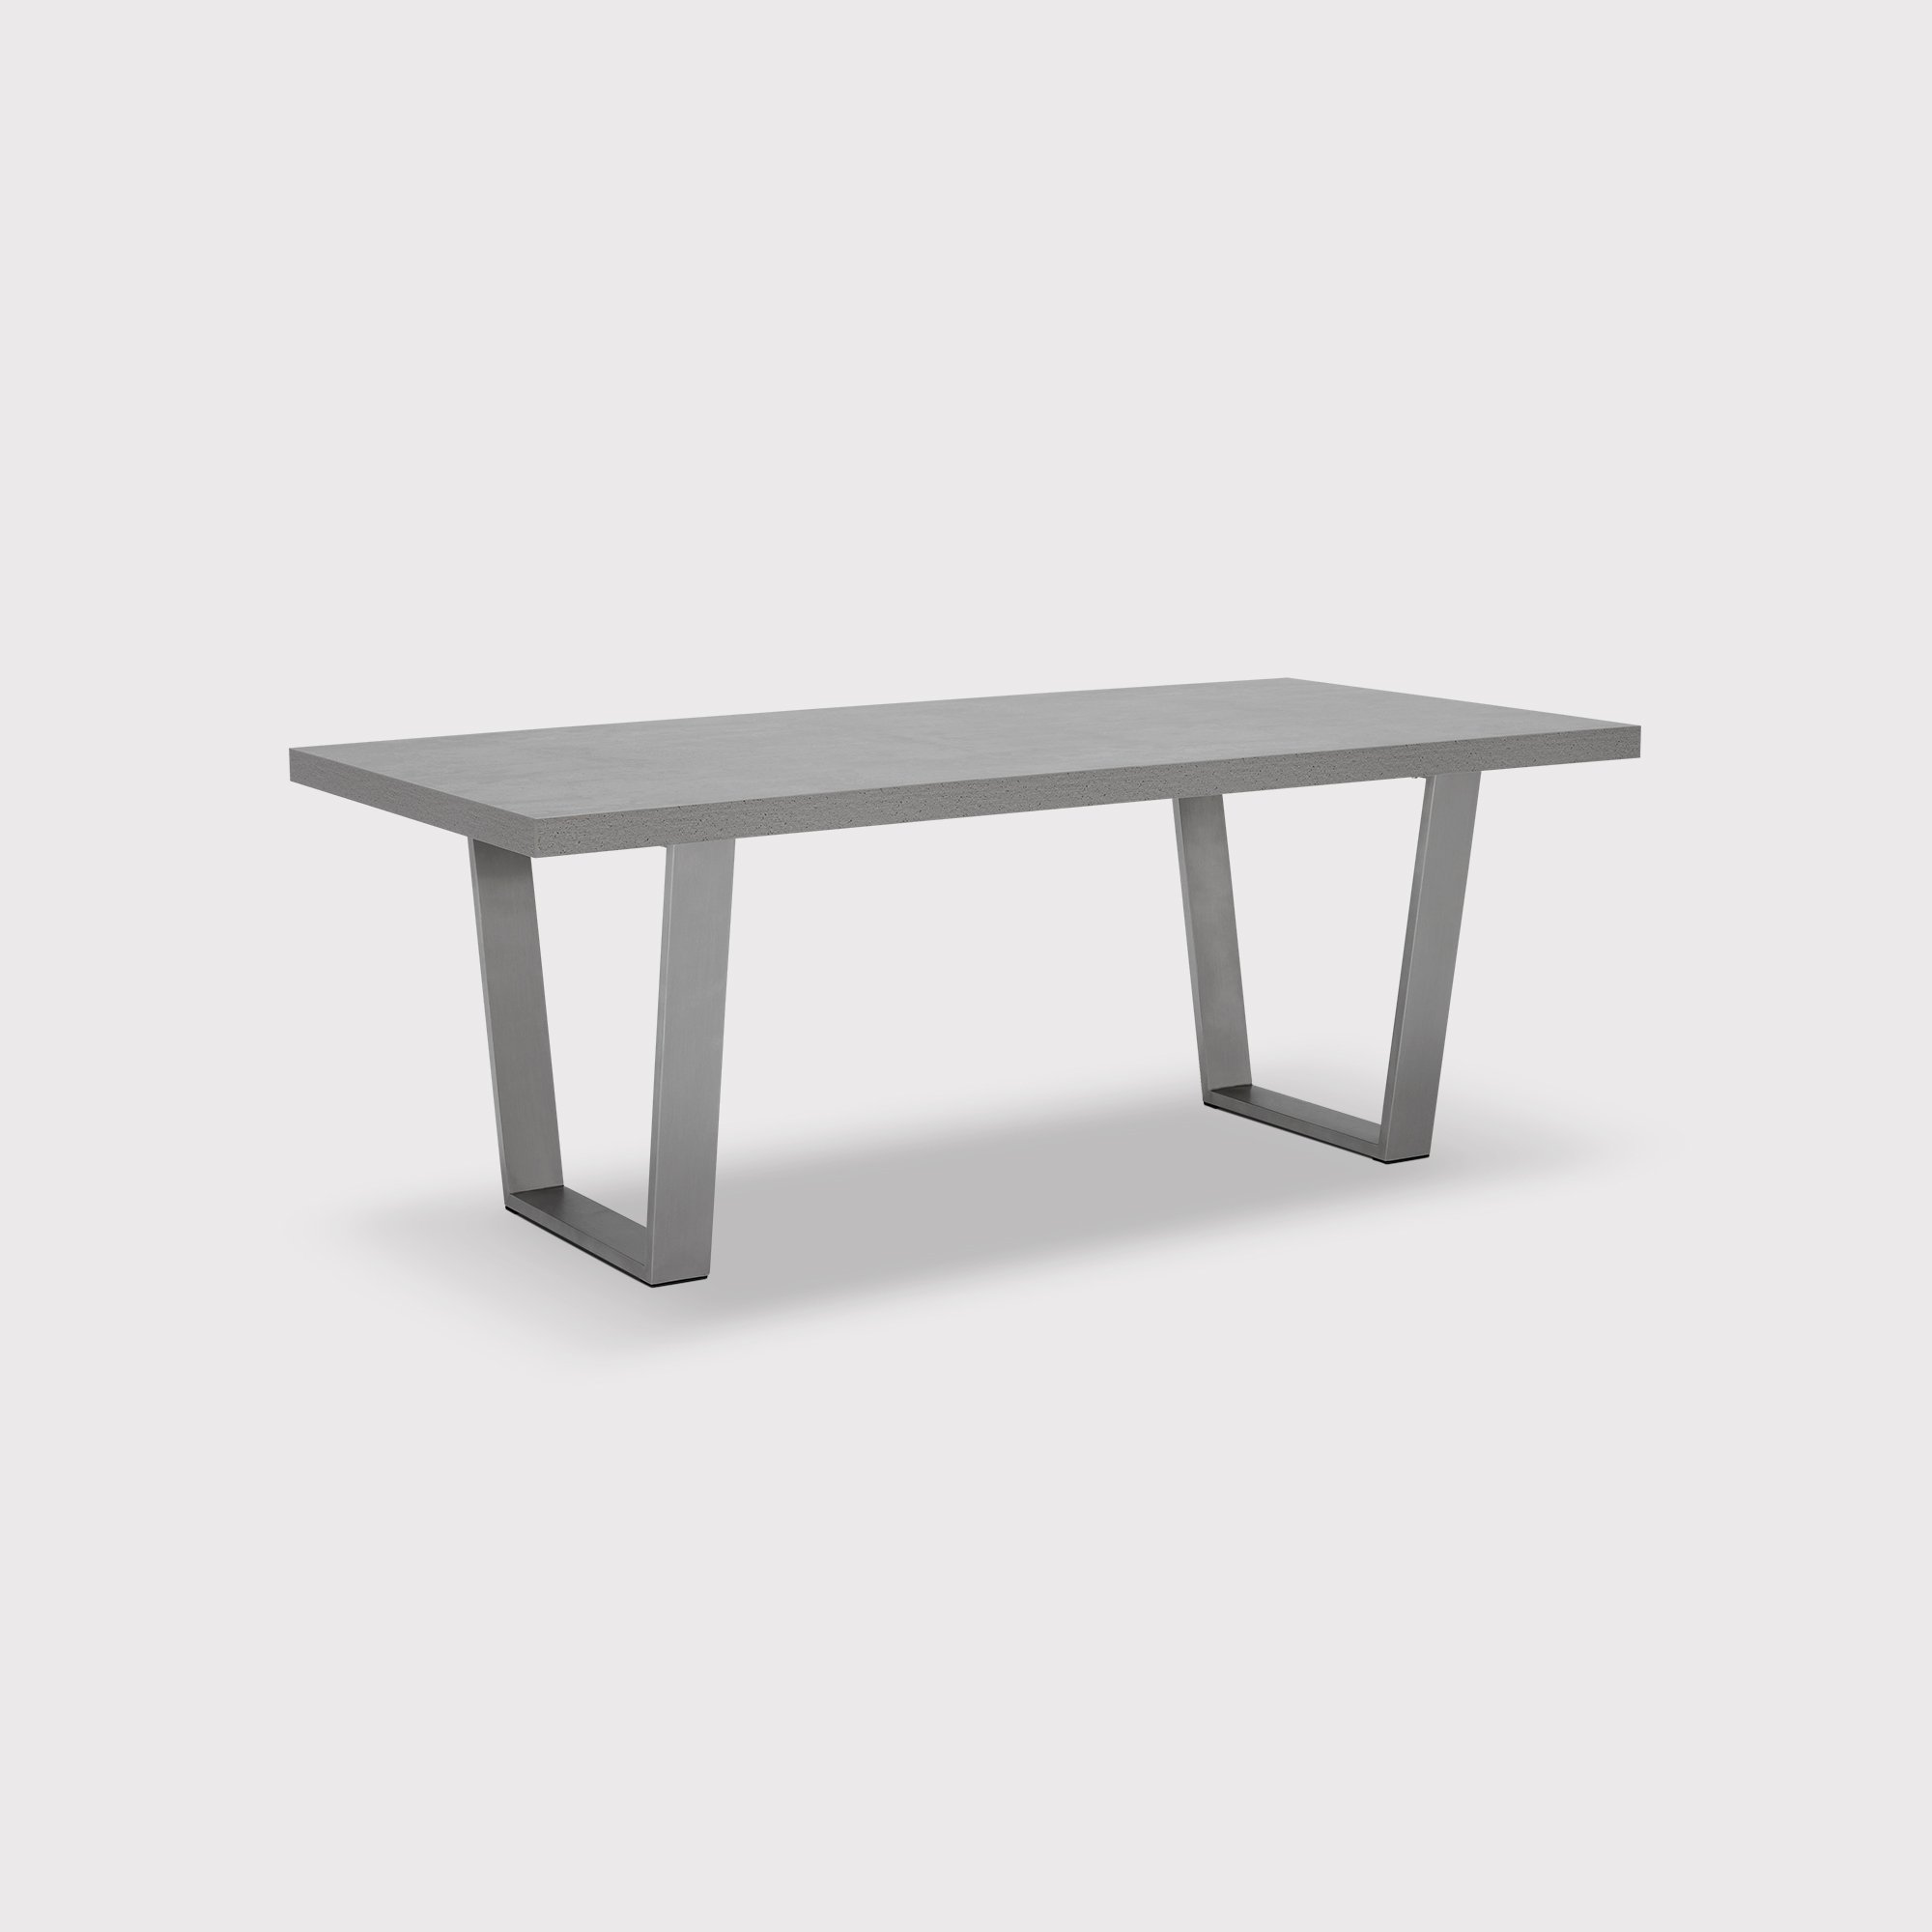 Photo of 200cm Halmstad dining table 200cm in grey w200cm